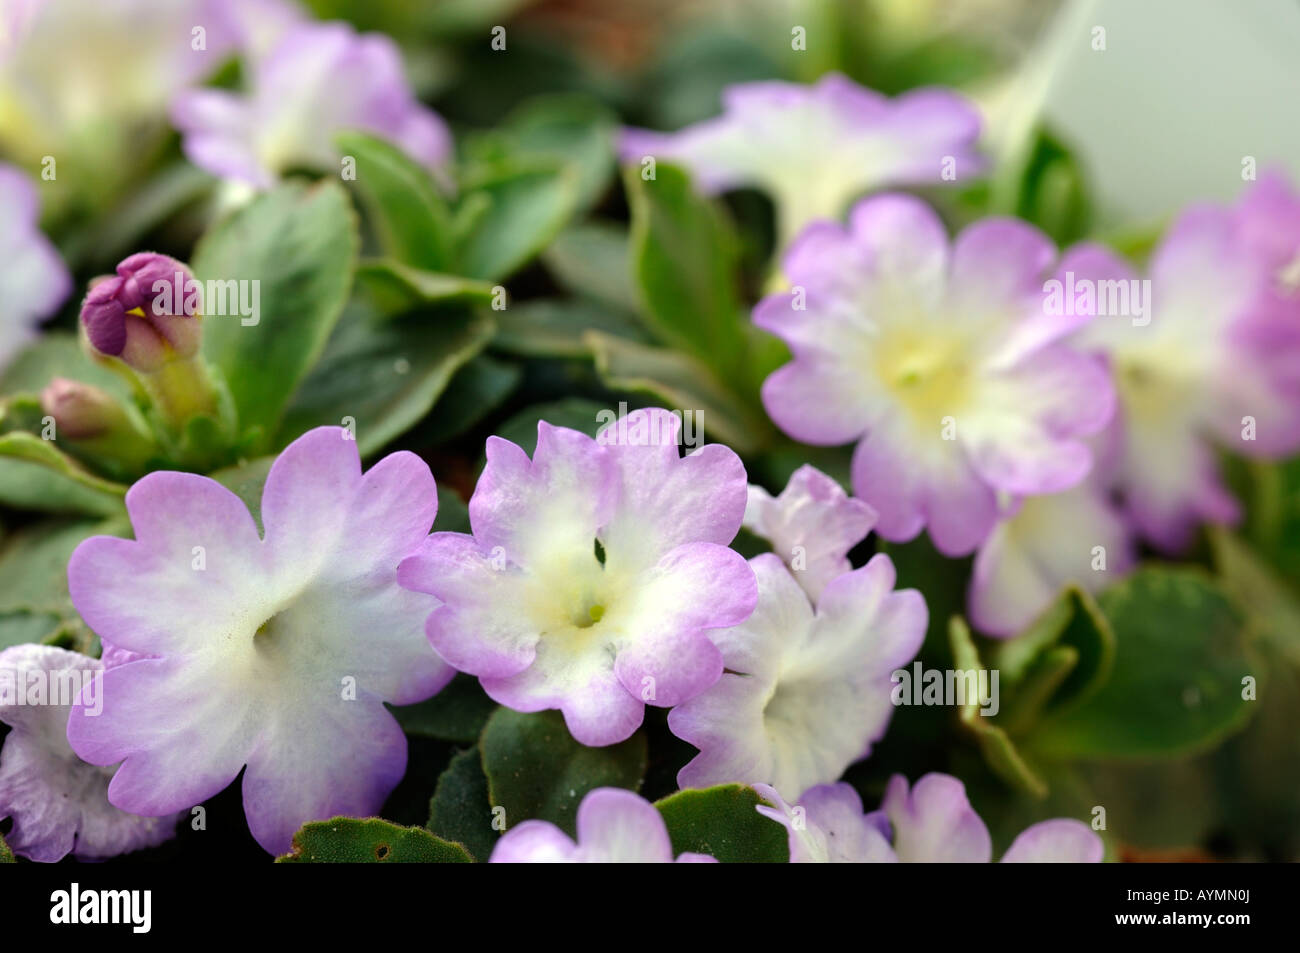 White and purple tinted tinged tint tinge primula flowers Stock Photo